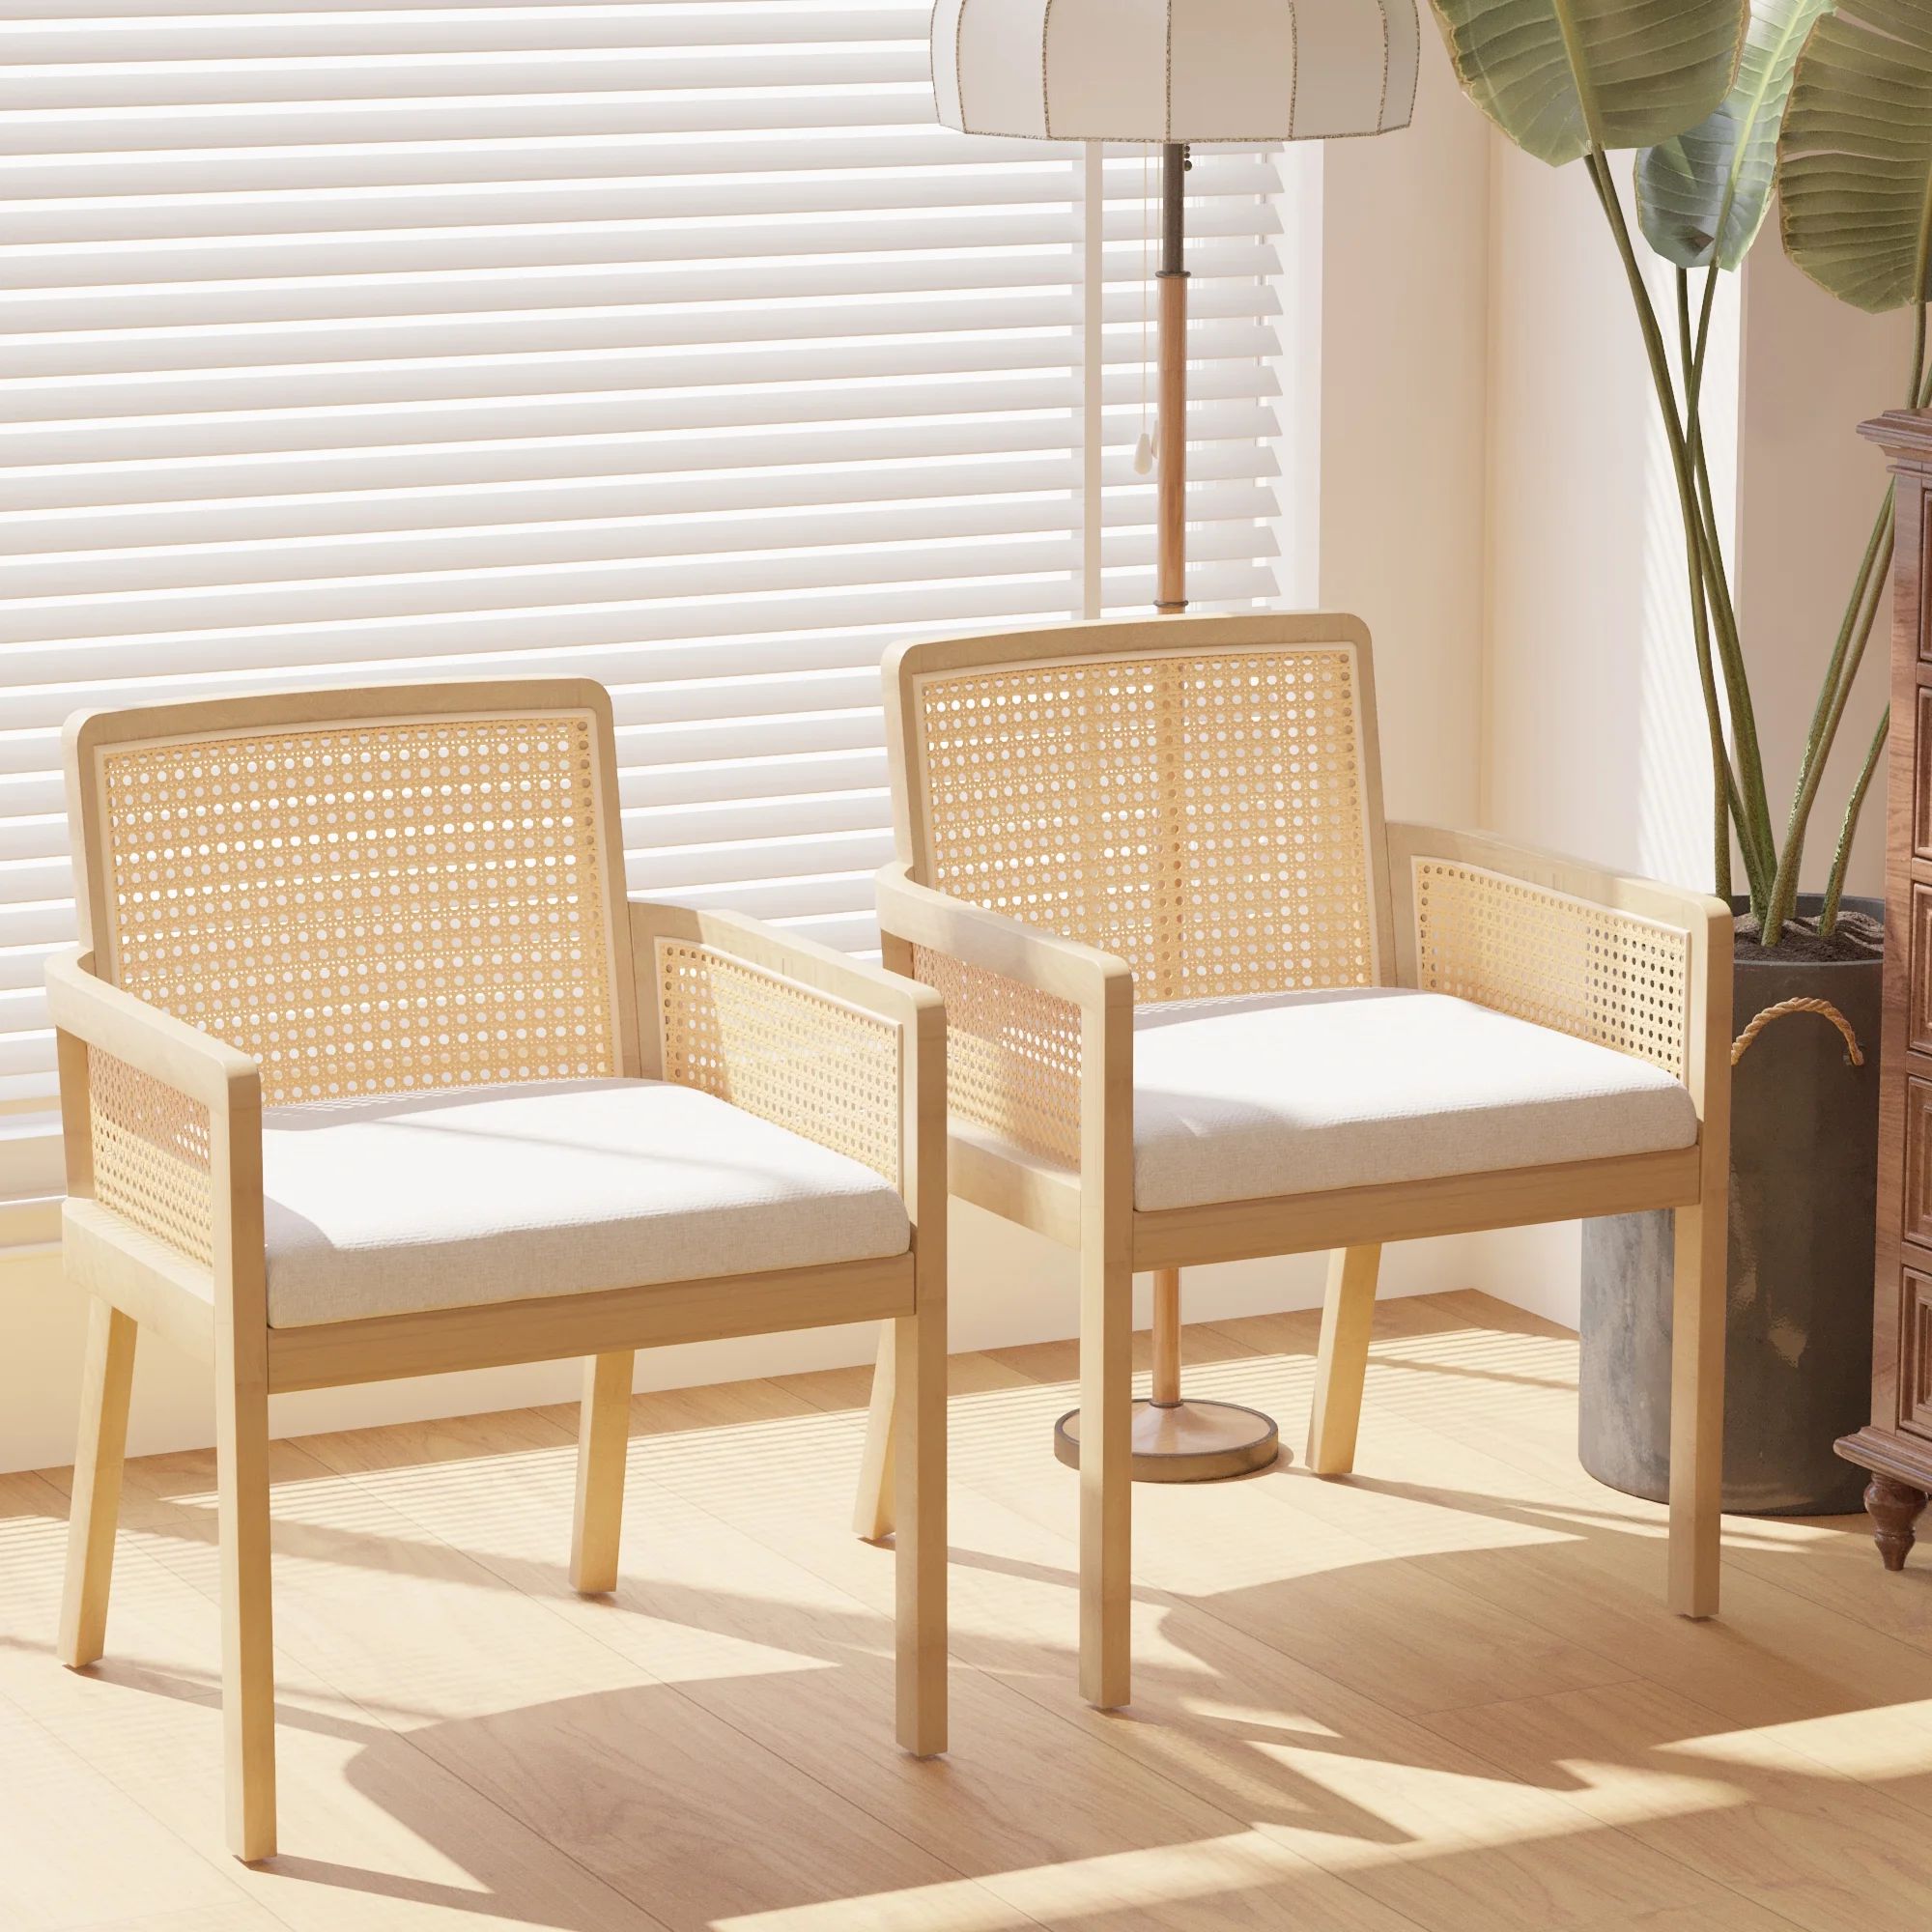 MeetLeisure Mid-Century Modern Rattan Chair Set of 2 with Cushions, Light Wood | Walmart (US)